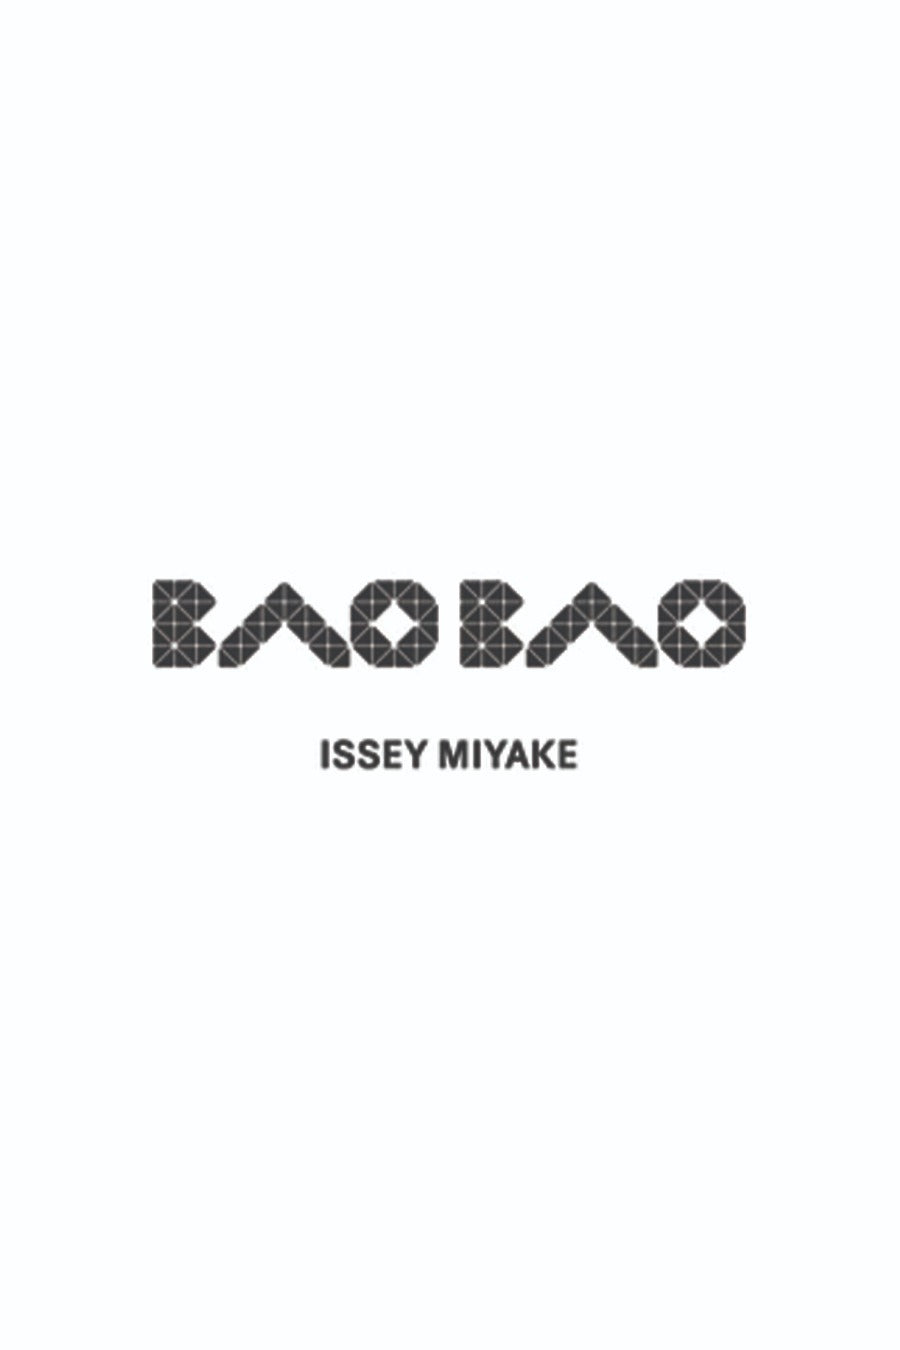 Club21 Thailand on X: Bao Bao Issey Miyake Platinum 7x7 More info. T.  02-658-0118 and   / X